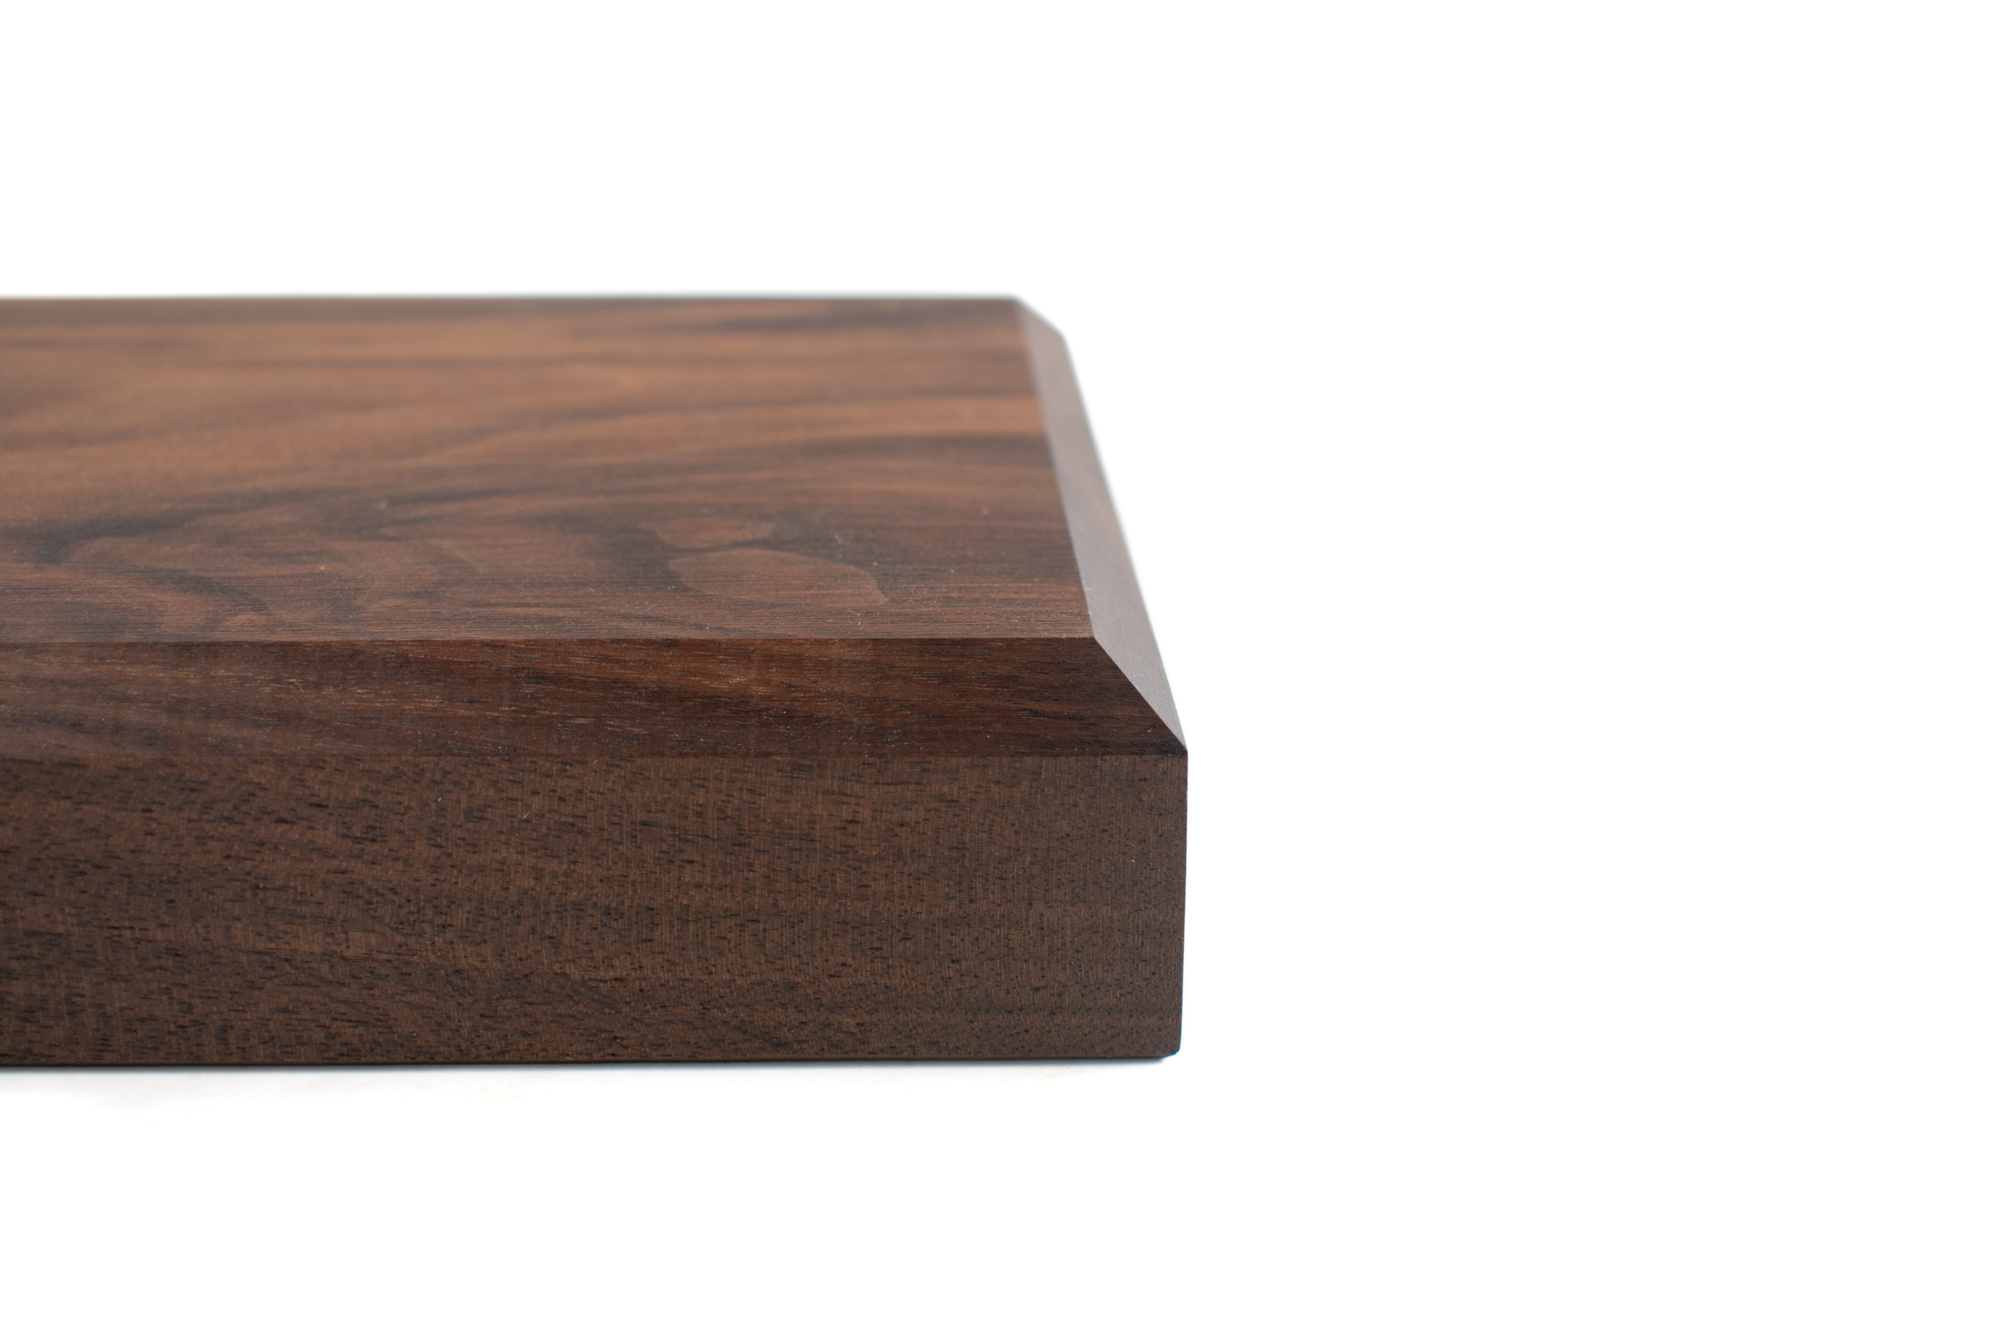 Walnut wood charcuterie board butcher board style 1 ¾” thick 